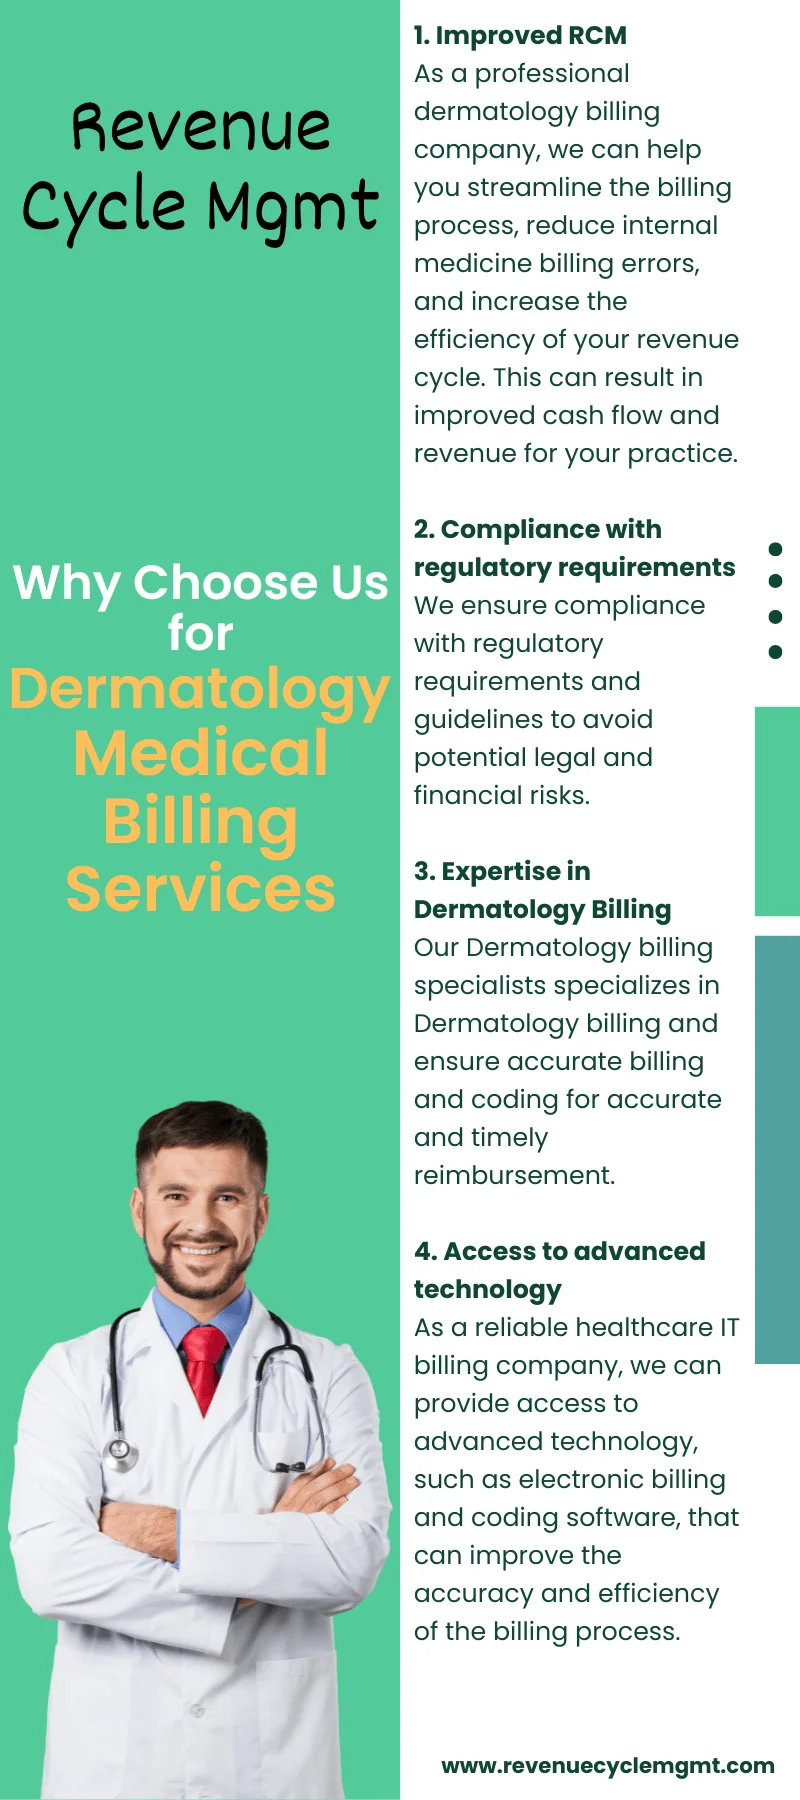 Why Choose Us for Dermatology Medical Billing Services